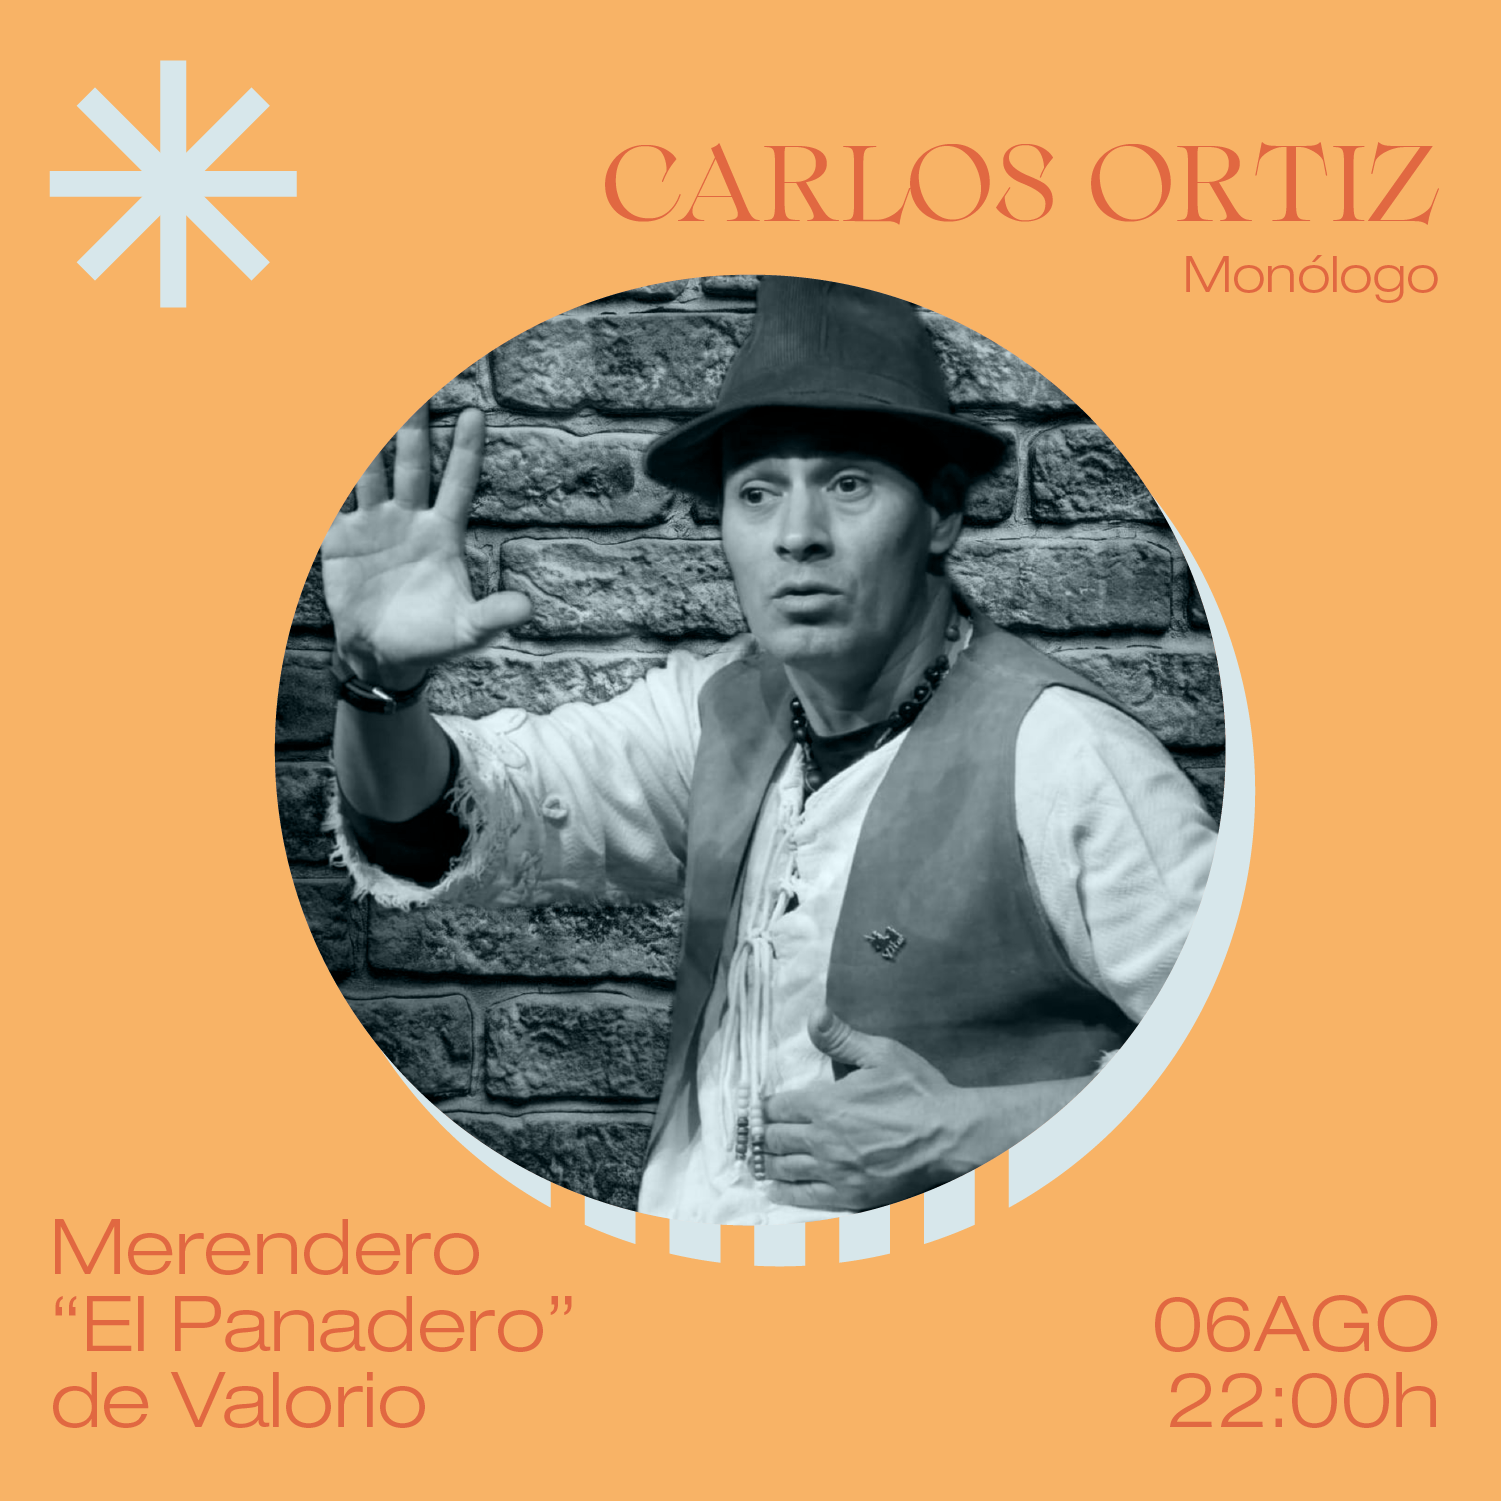 Monólogo Carlos Ortiz. Agenda cultural. Zamora Inquieta